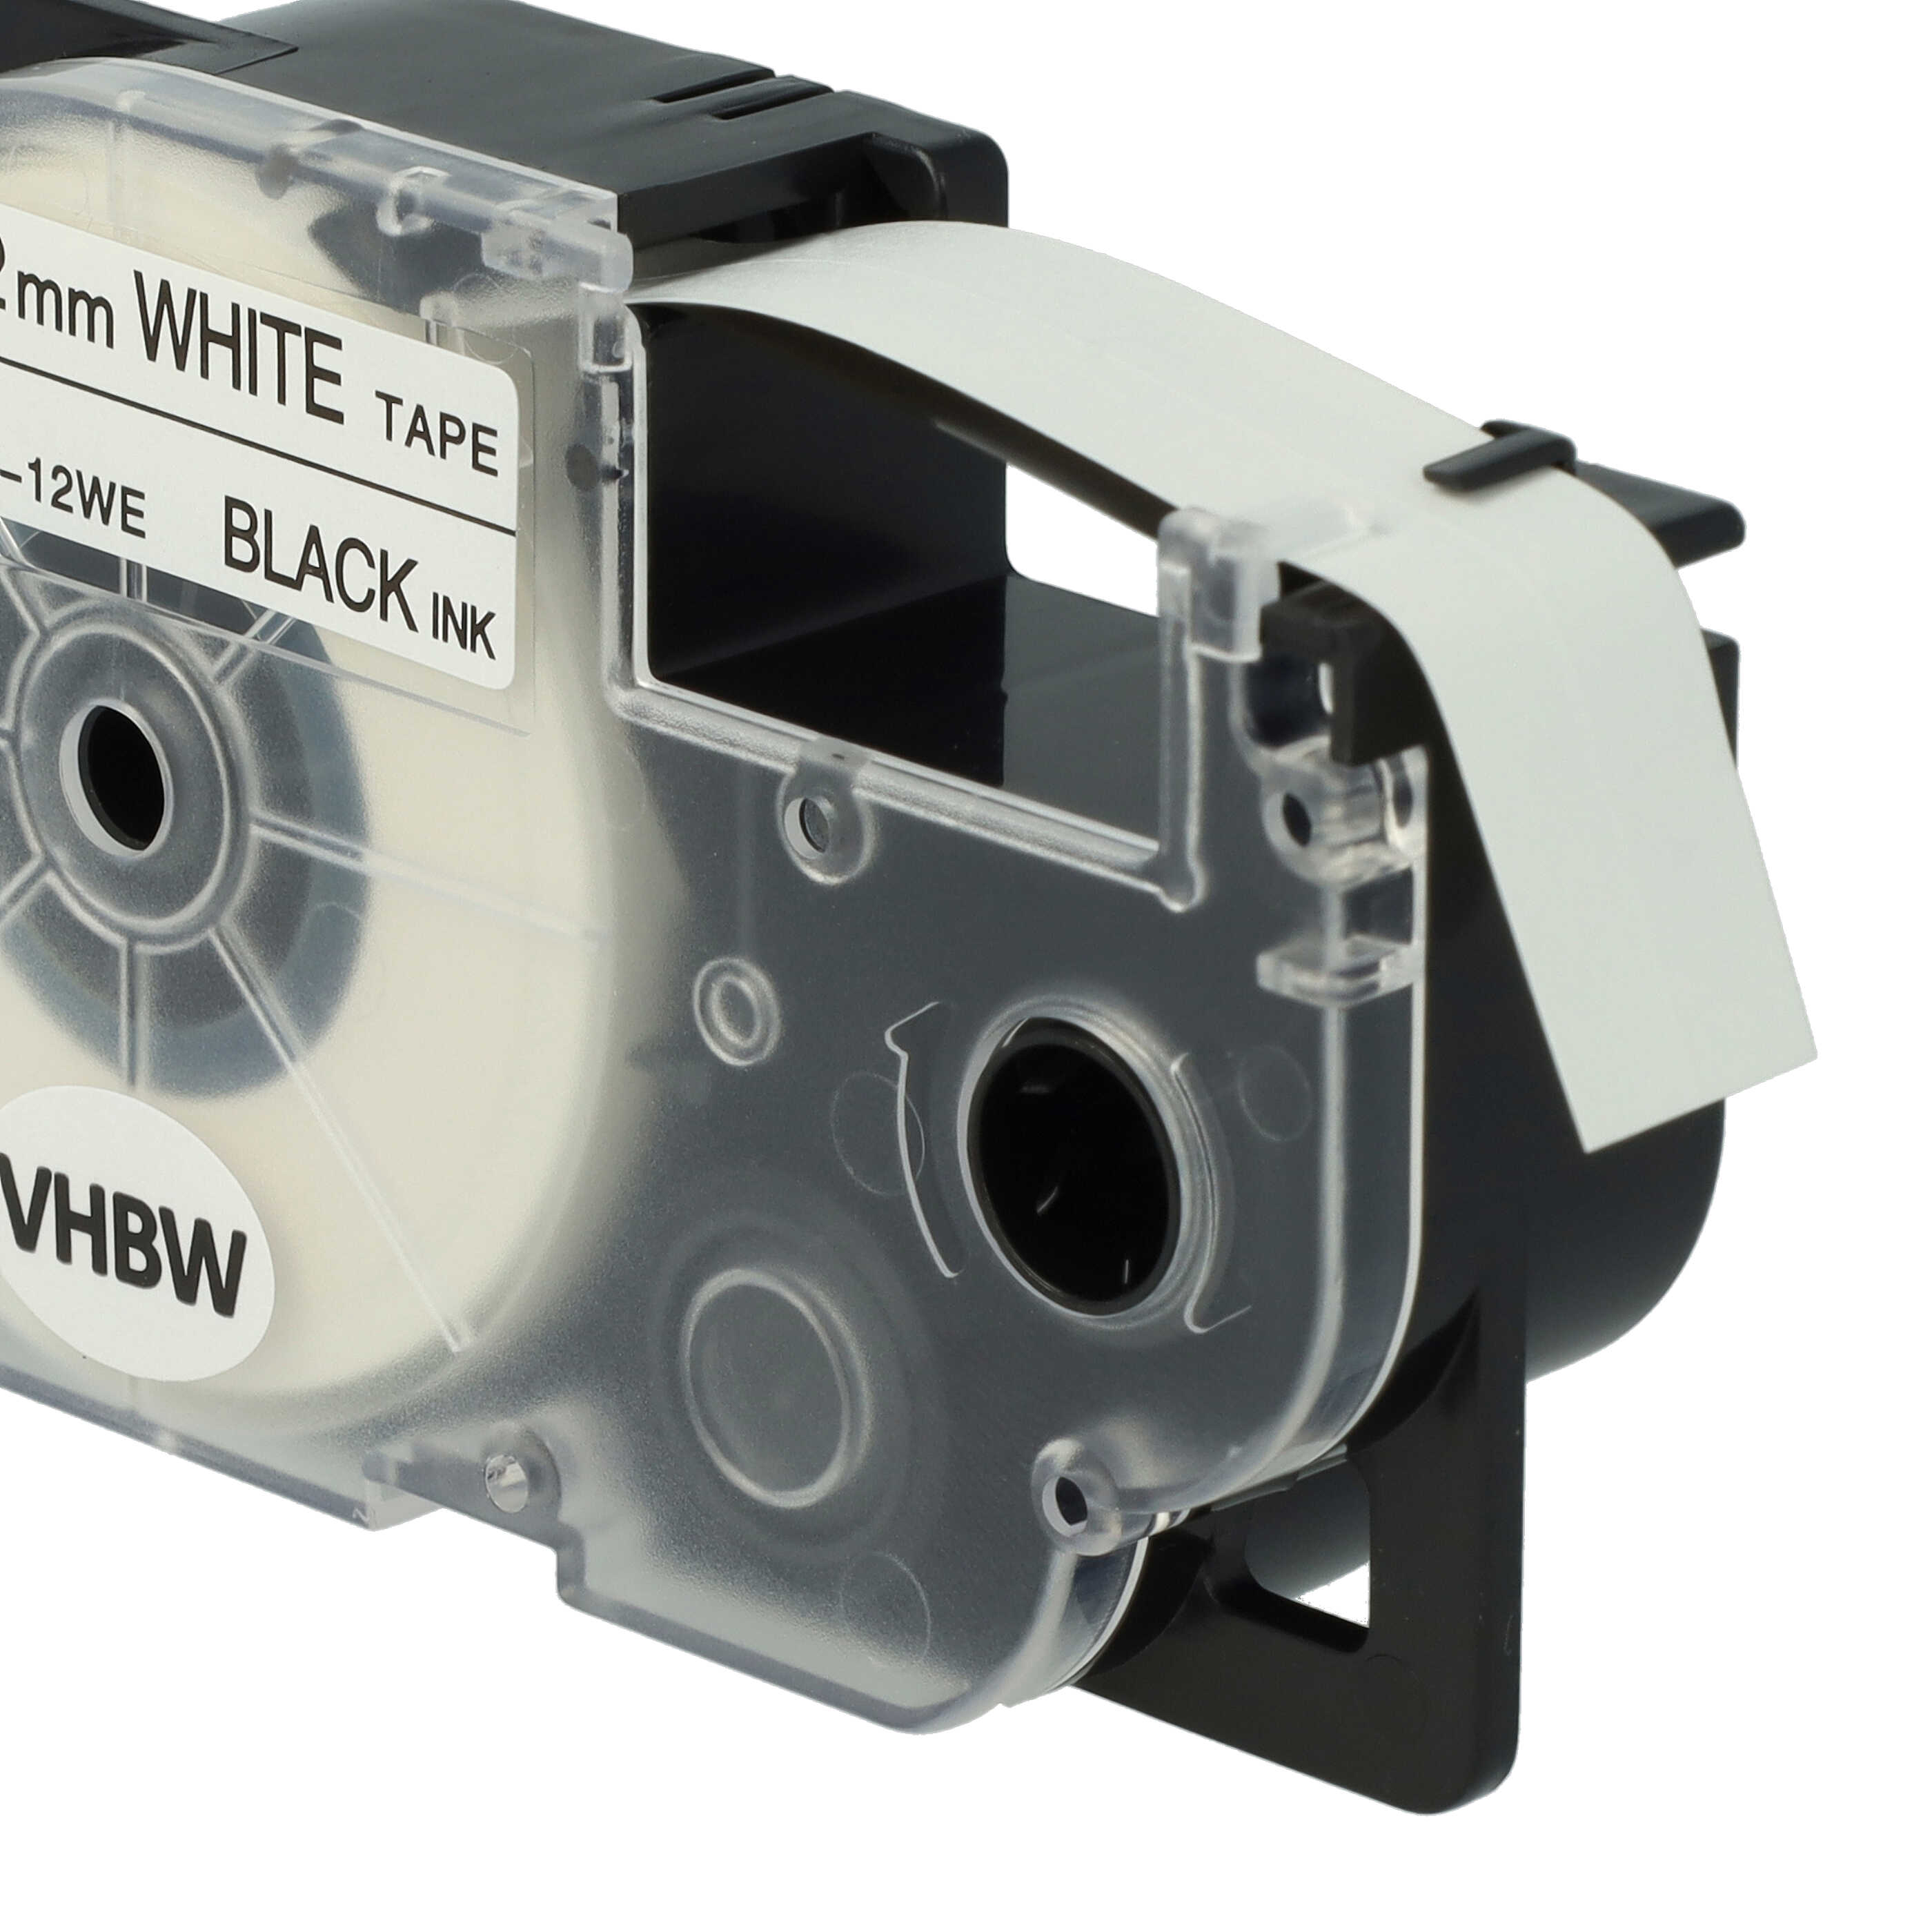 3x Casete cinta escritura reemplaza Casio XR-12WE, XR-12WE1 Negro su Blanco